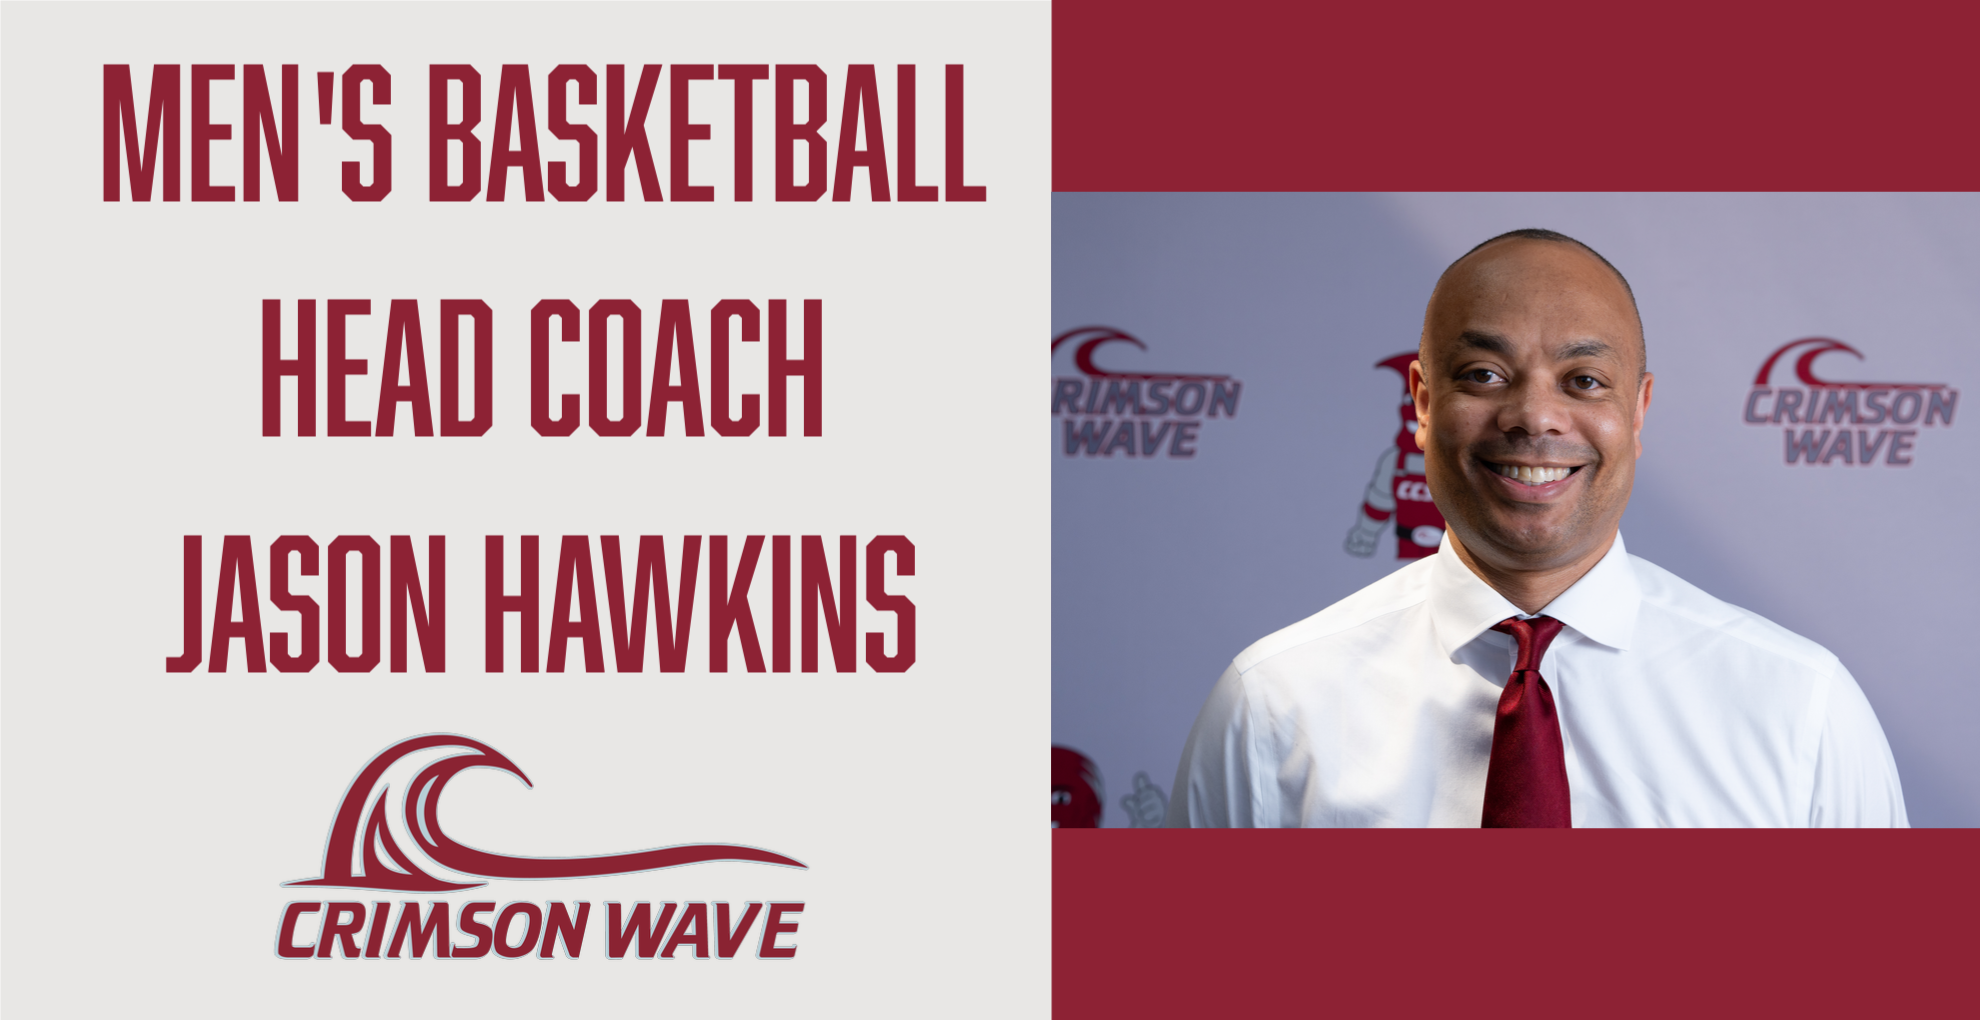 Hawkins named CCSJ Men’s Basketball Head Coach